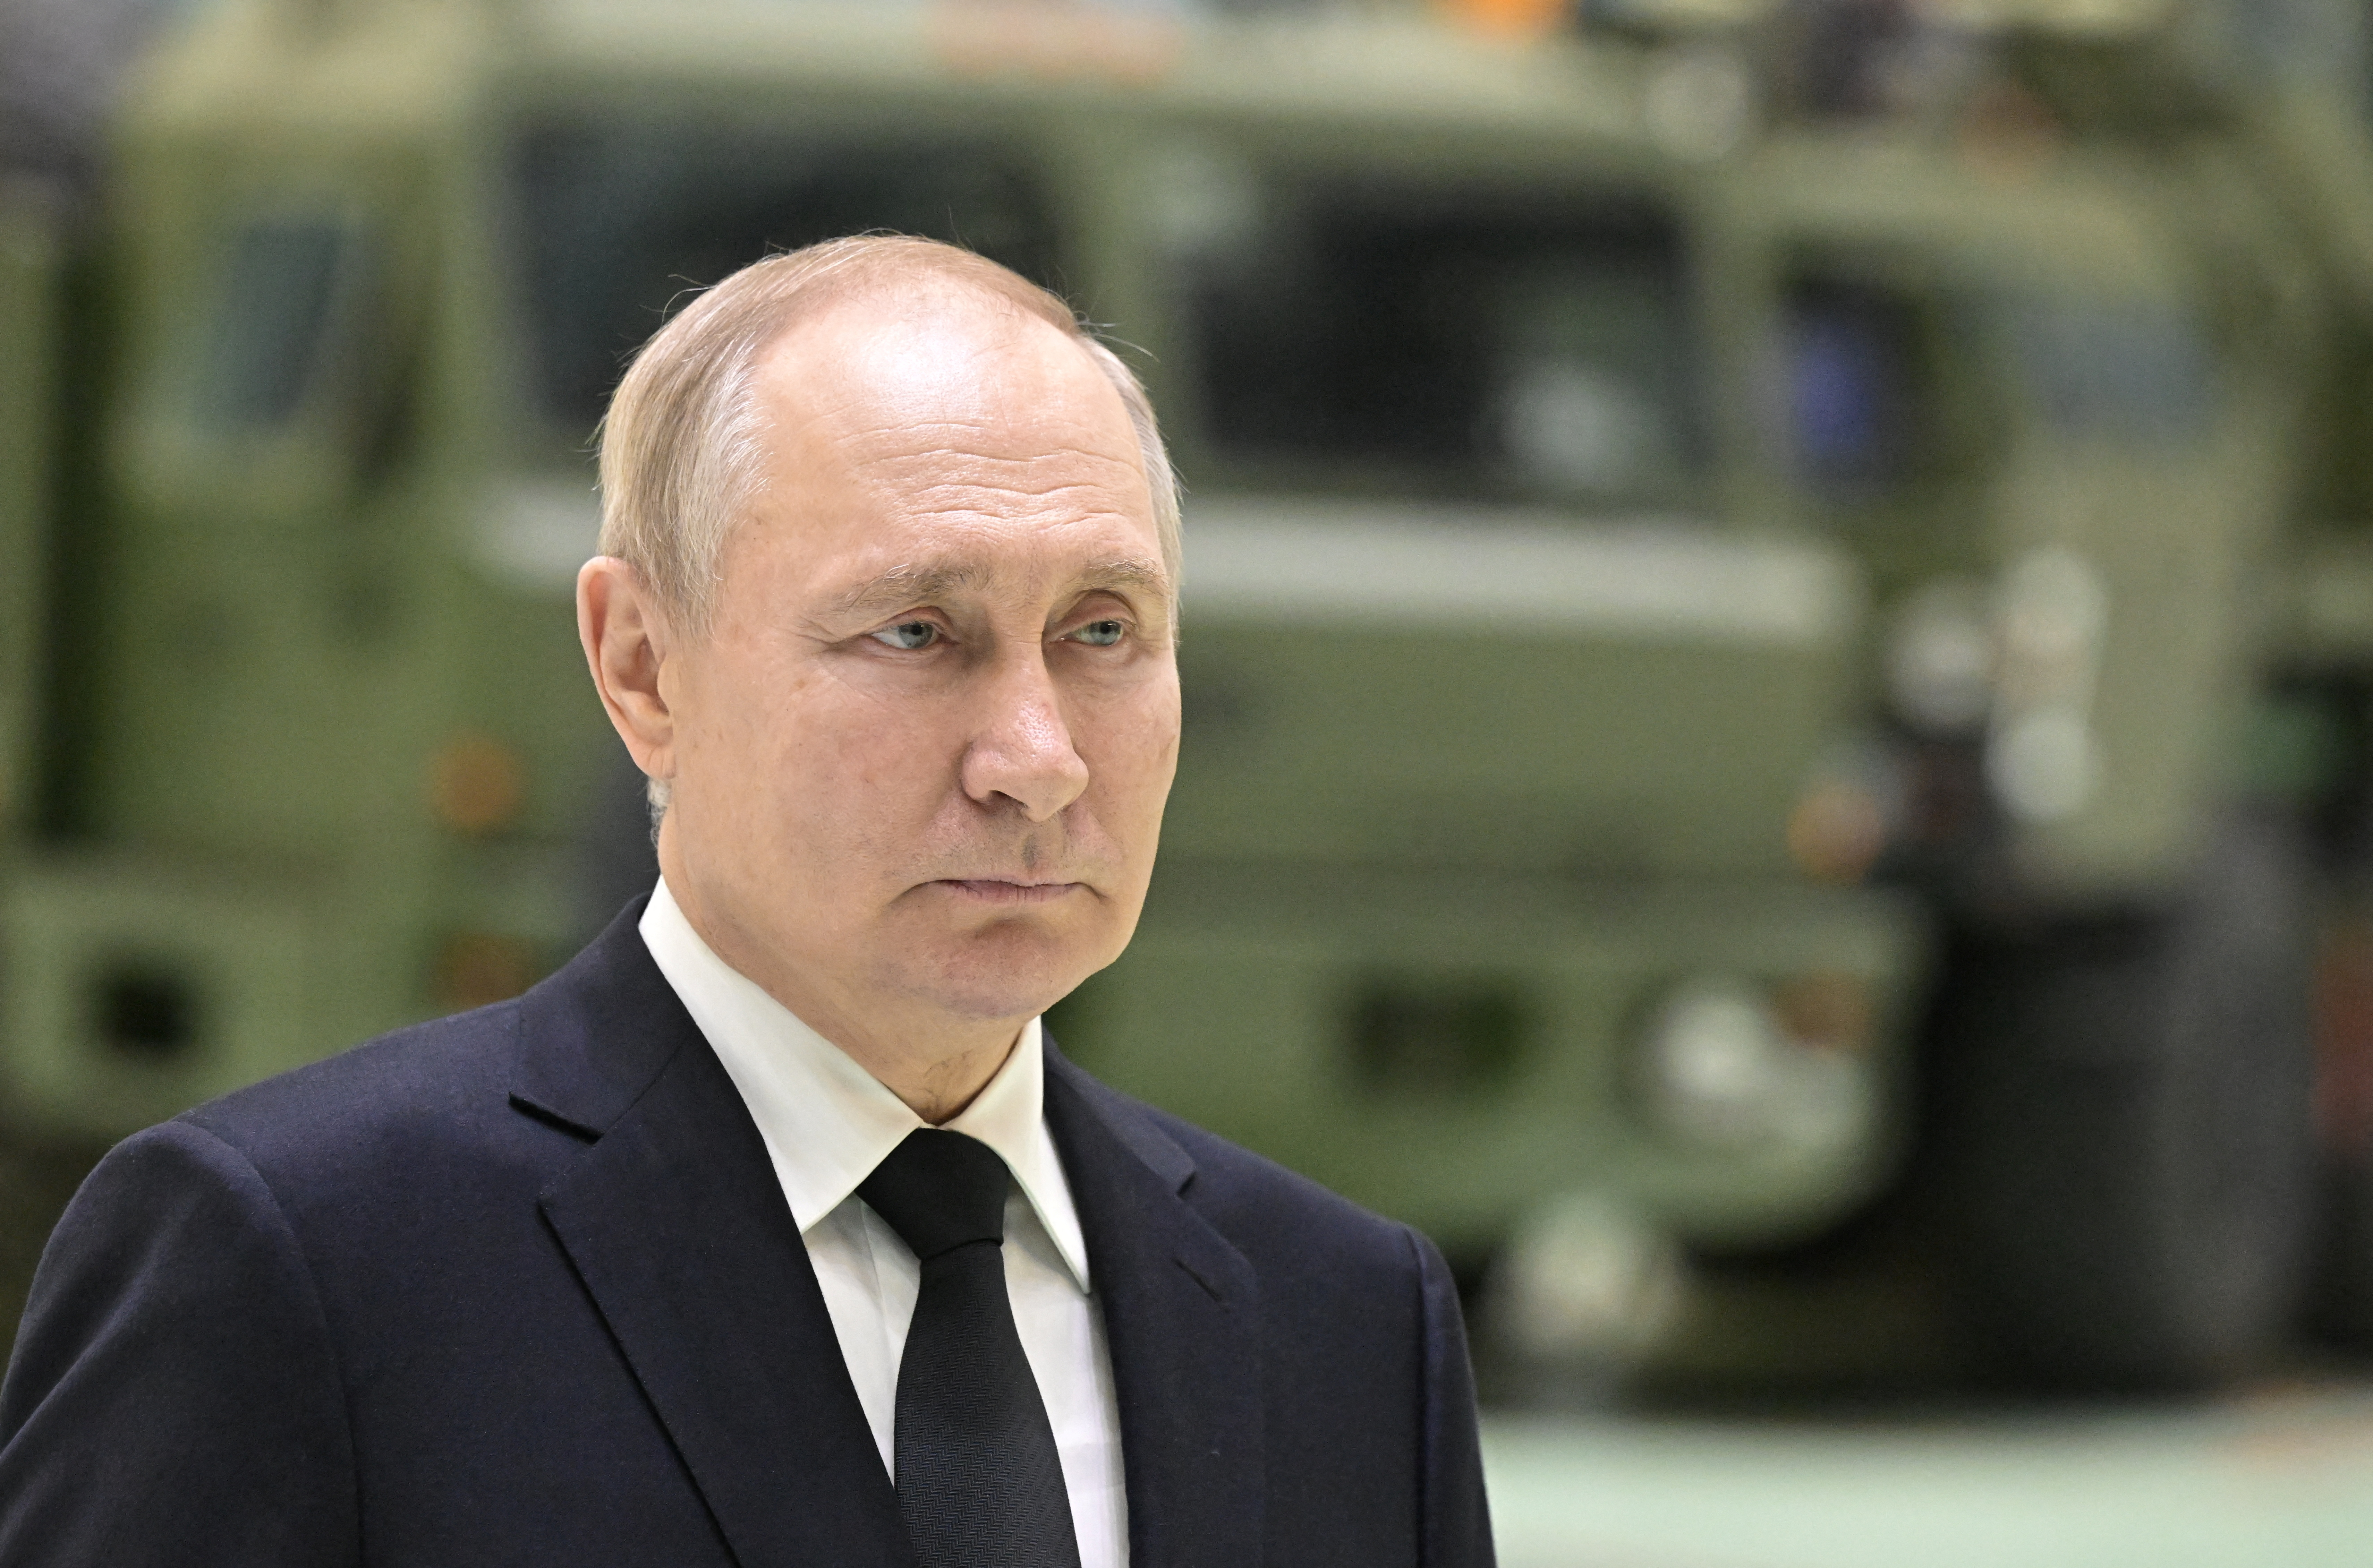 Putin durante la visita a una fabrica de misiles este miércoles (Sputnik/Ilya Pitalyov/Pool via REUTERS)